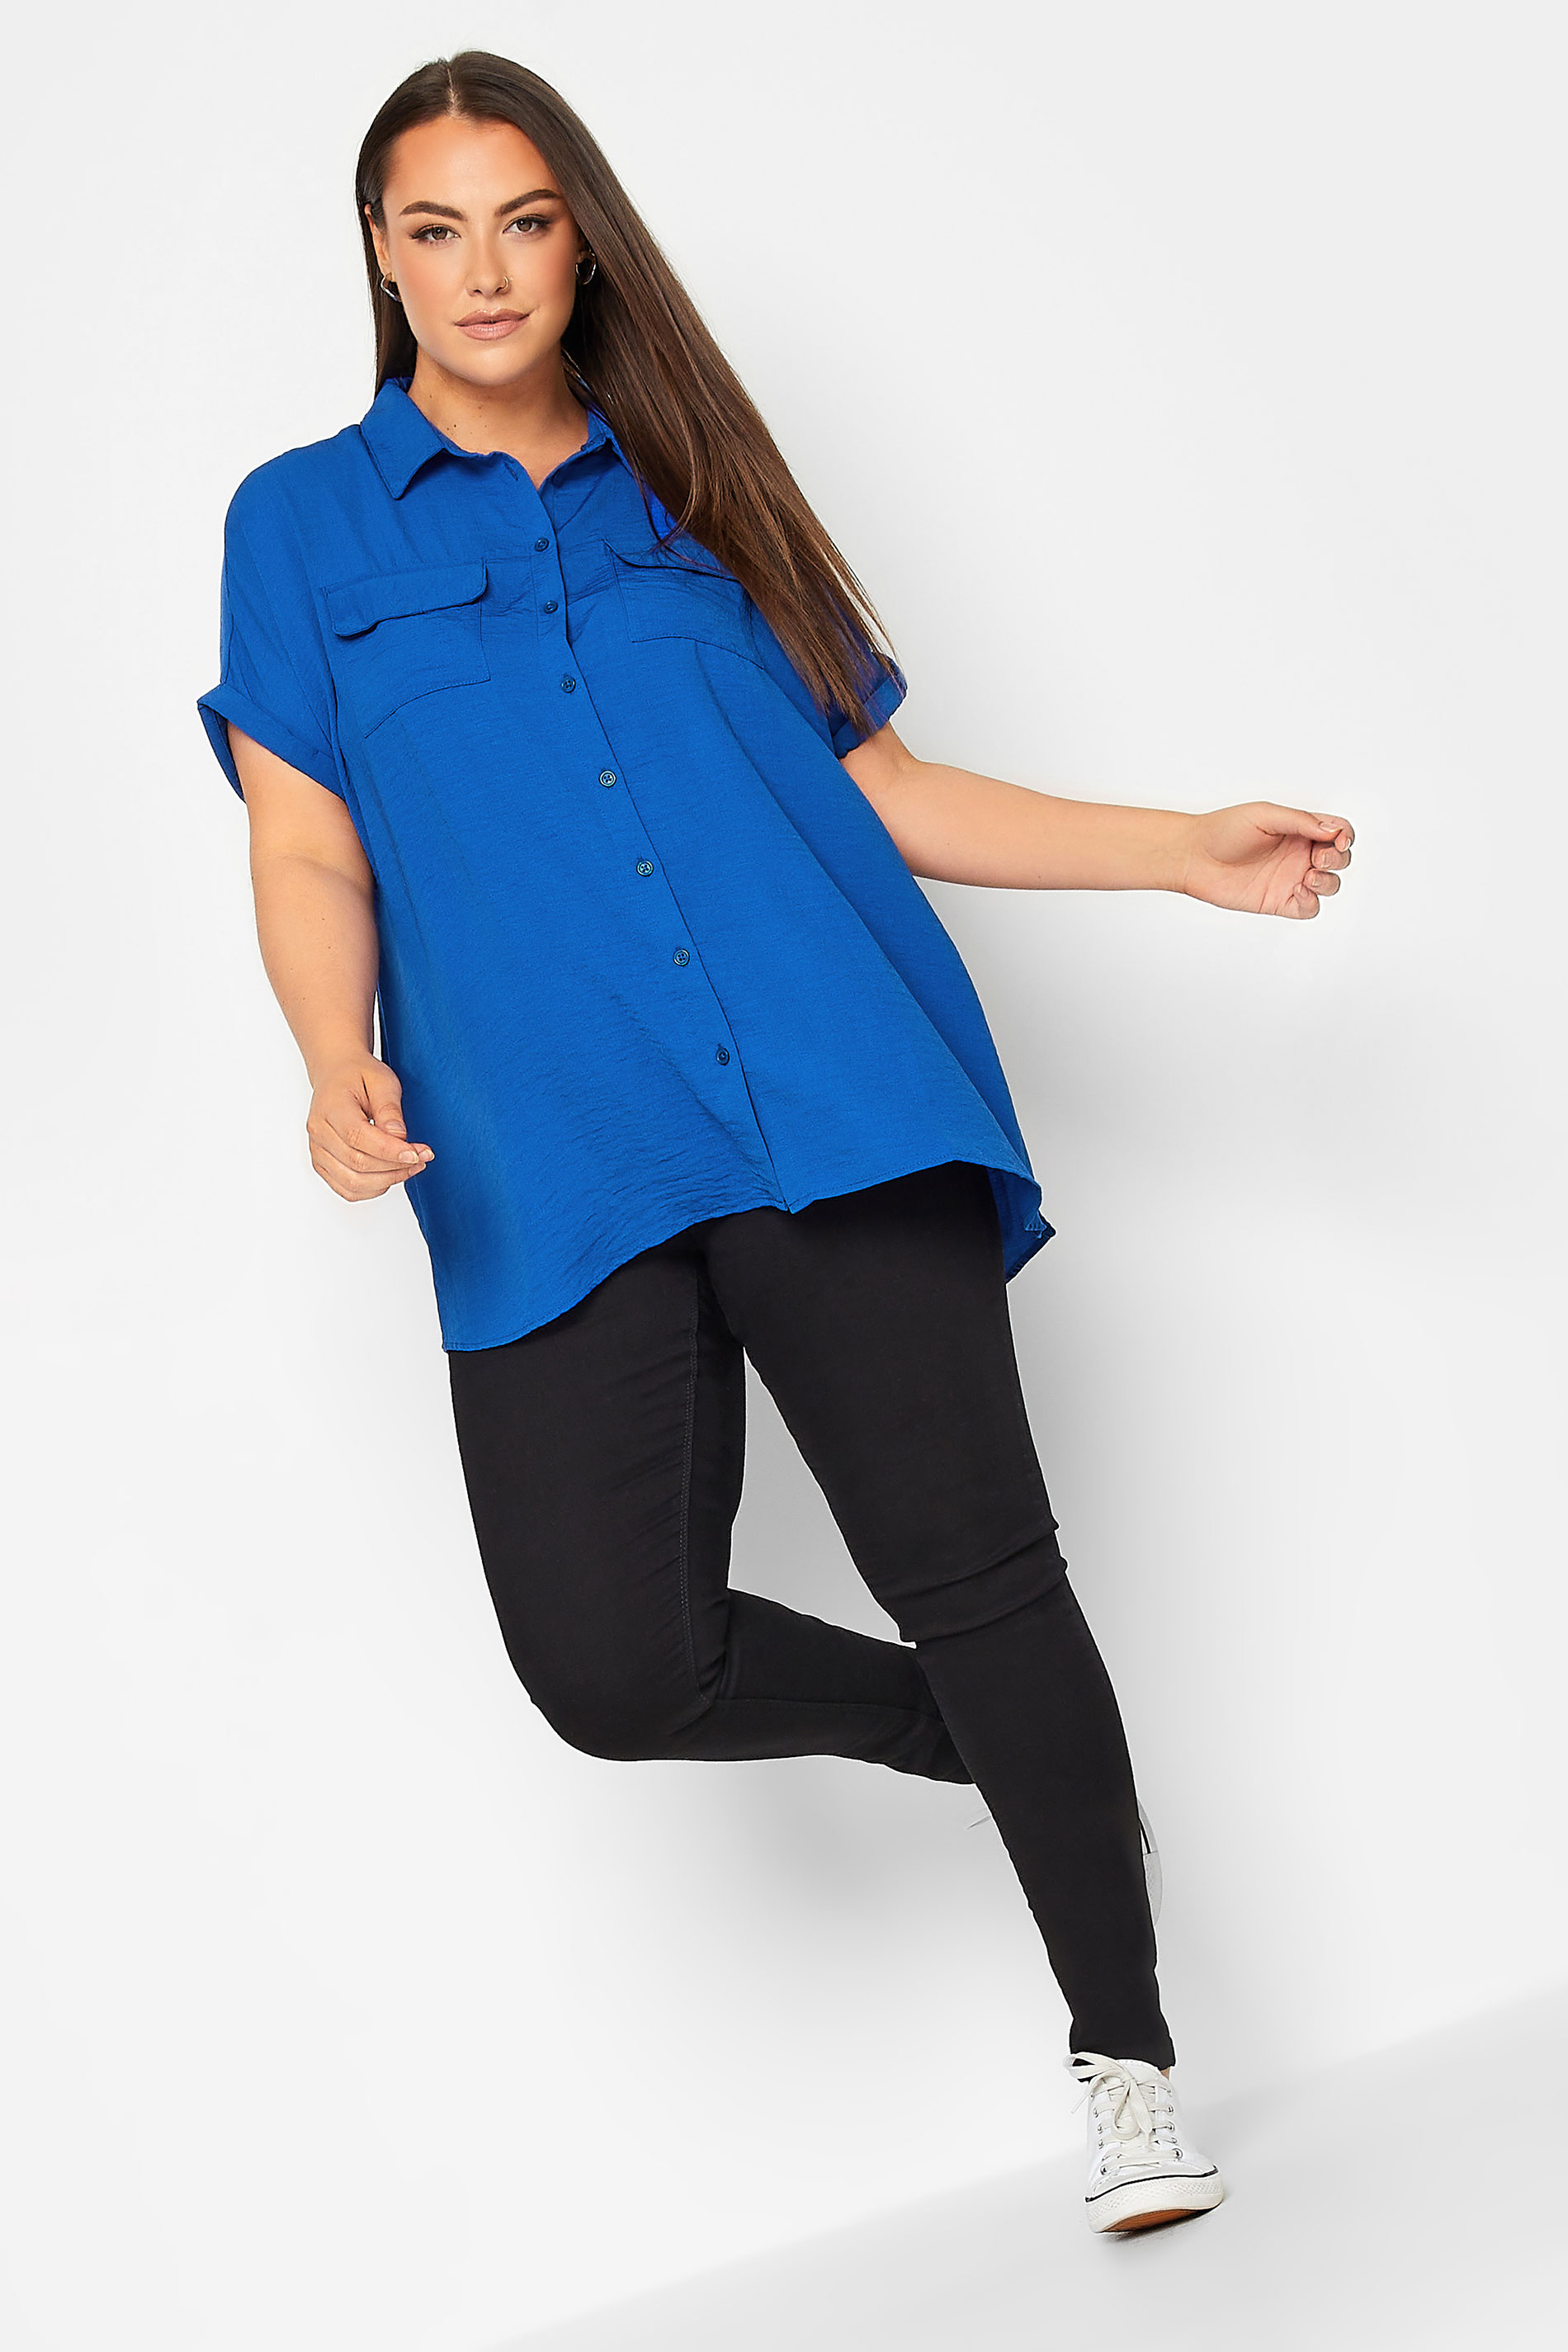 YOURS Curve Plus Size Cobalt Blue Utility Short Sleeve Shirt | Yours Clothing  3